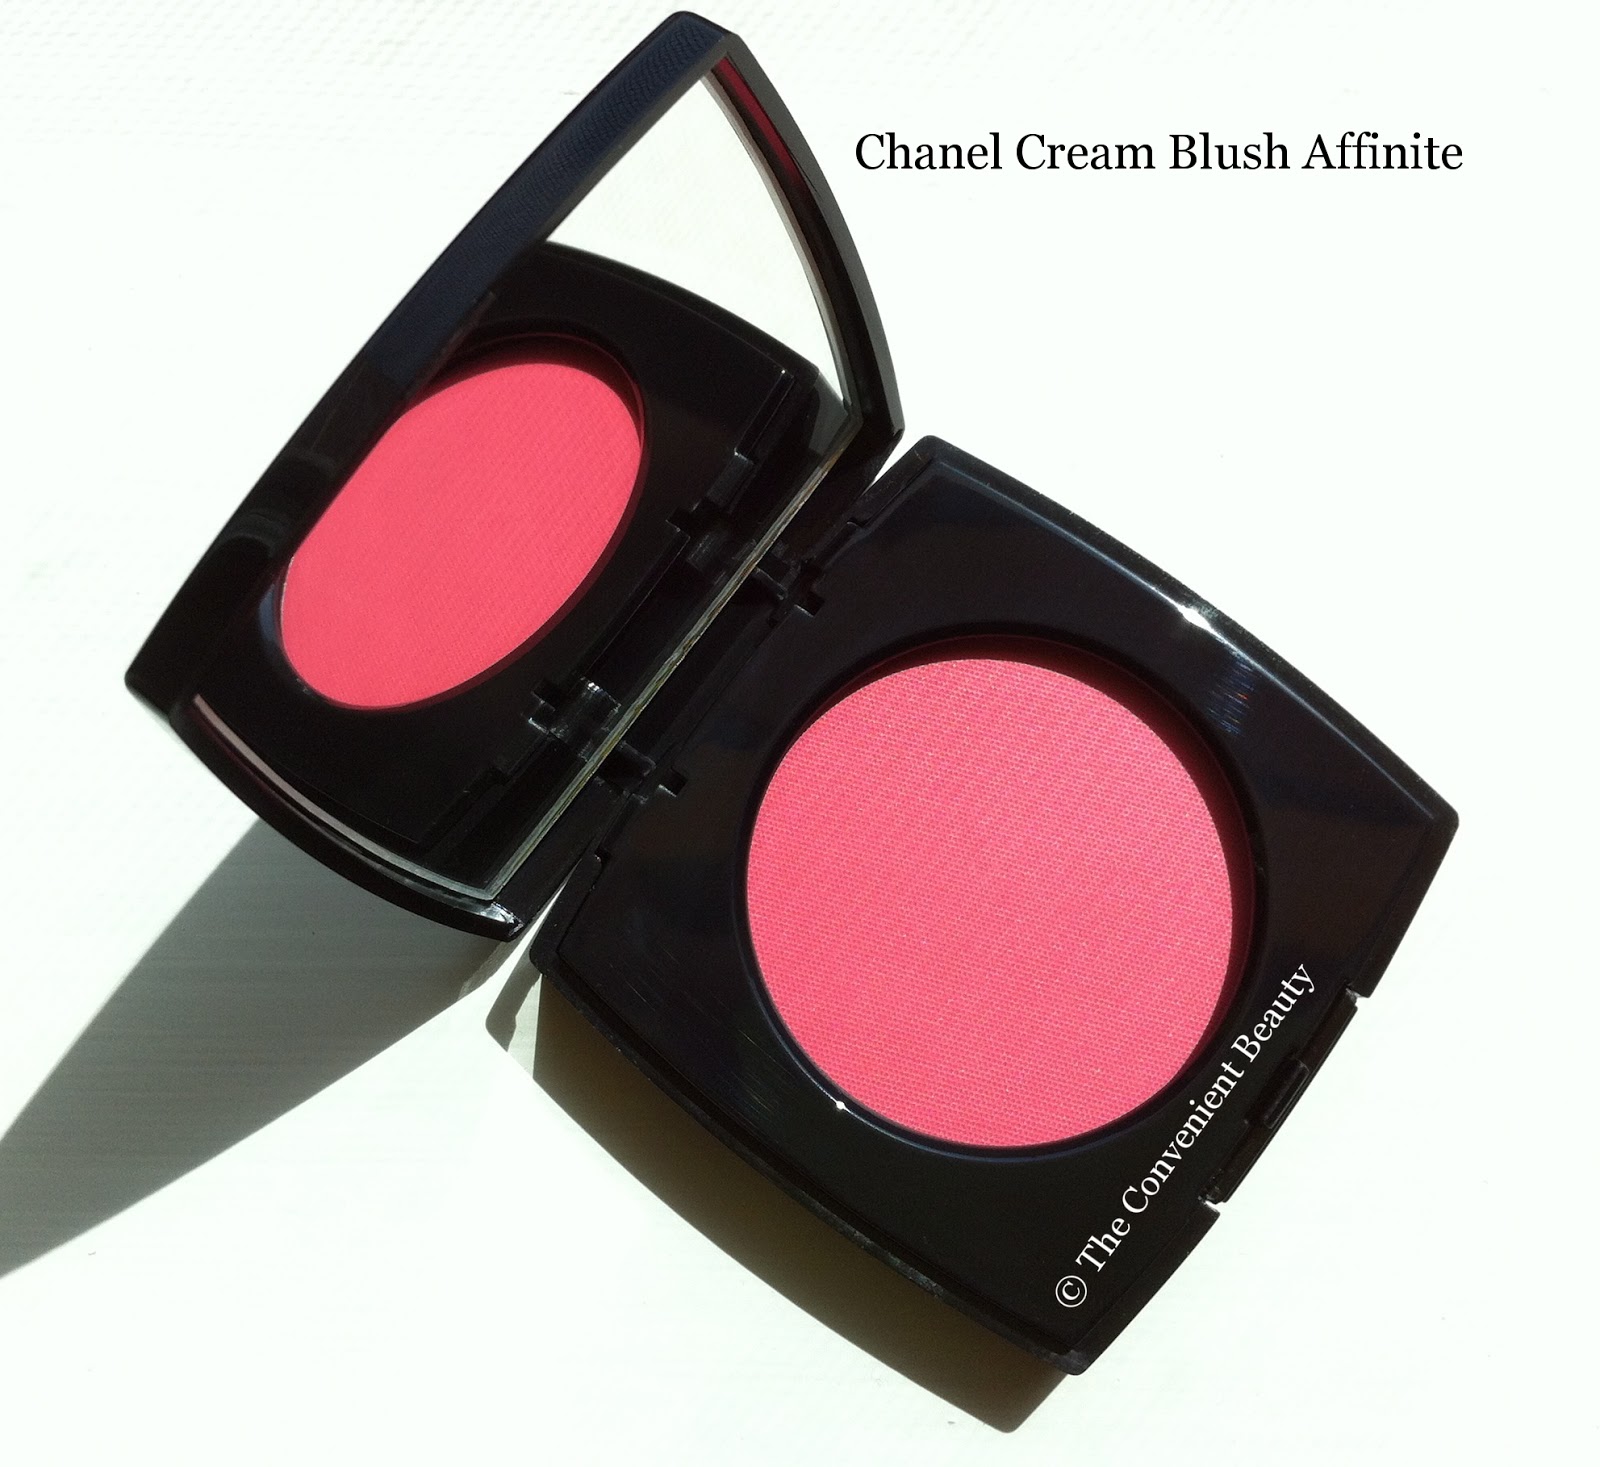 The Beauty: Chanel Cream Blush 65 Affinite